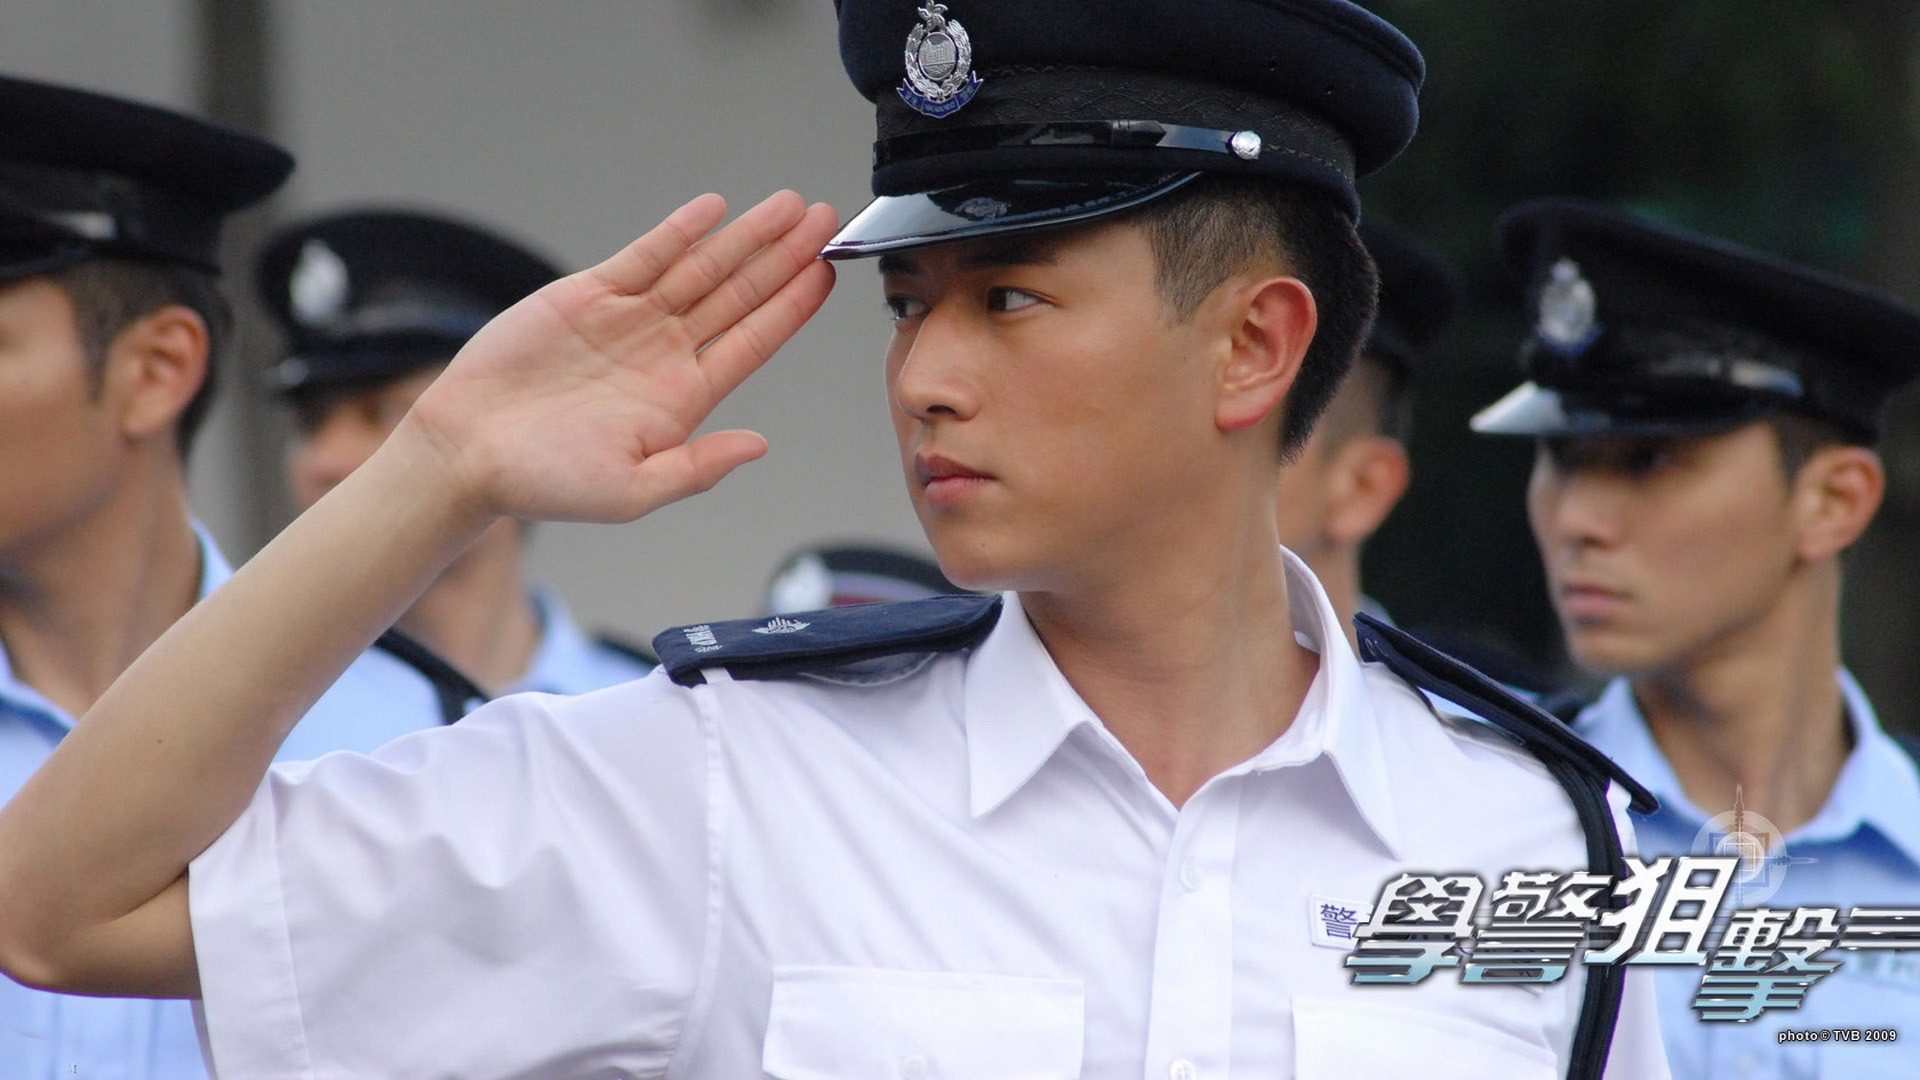 Populaires TVB Drama School Police Sniper #11 - 1920x1080